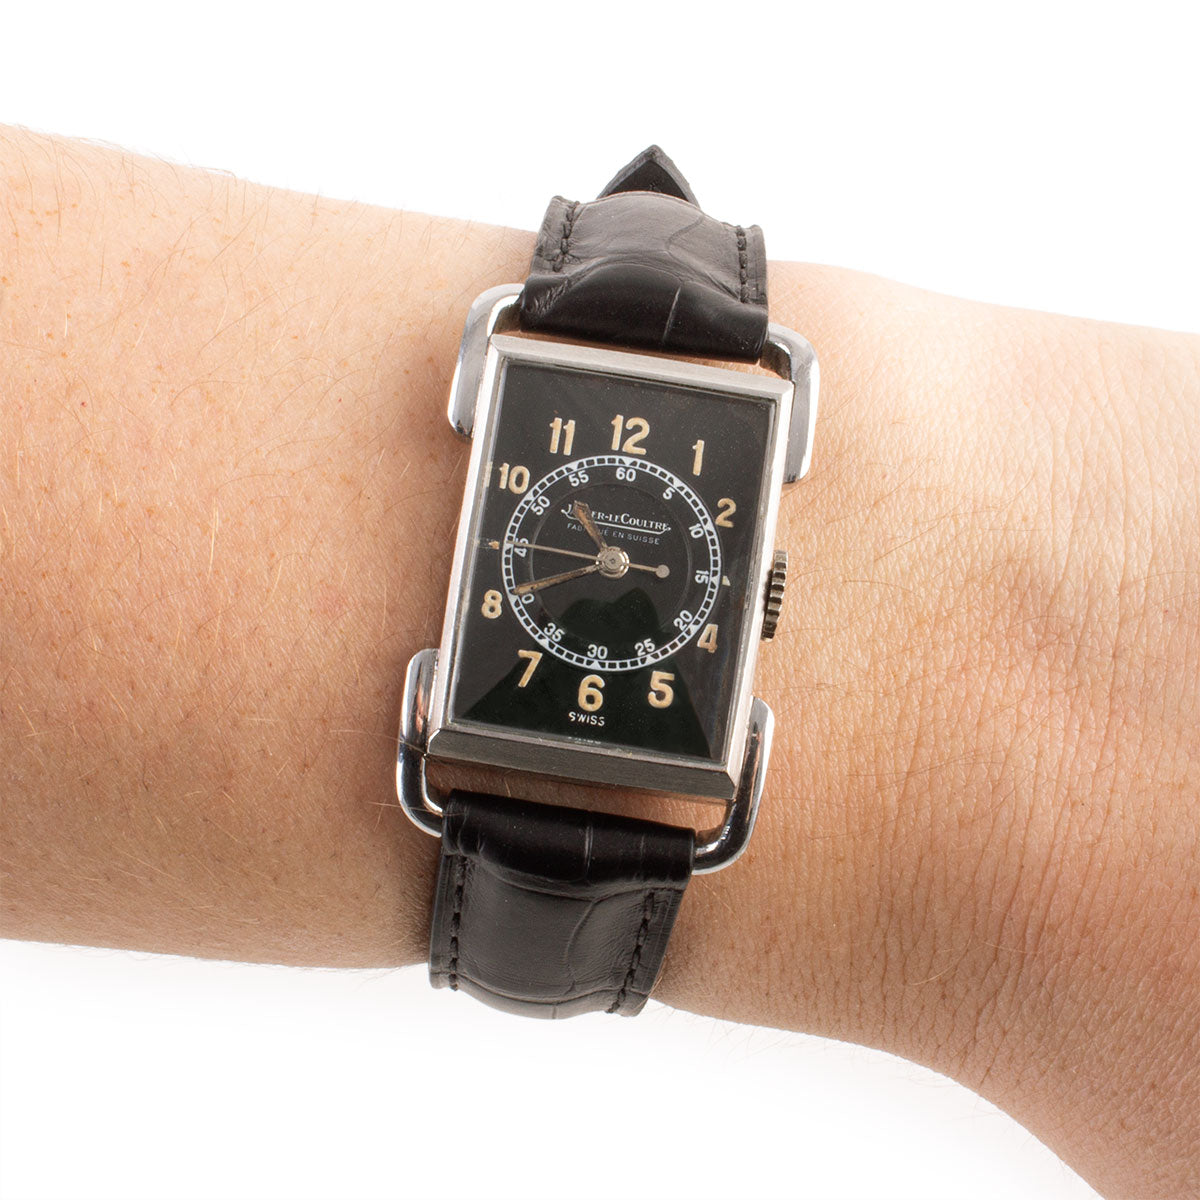 Second-hand watch - Jaeger Lecoultre - Etrier - 2600€